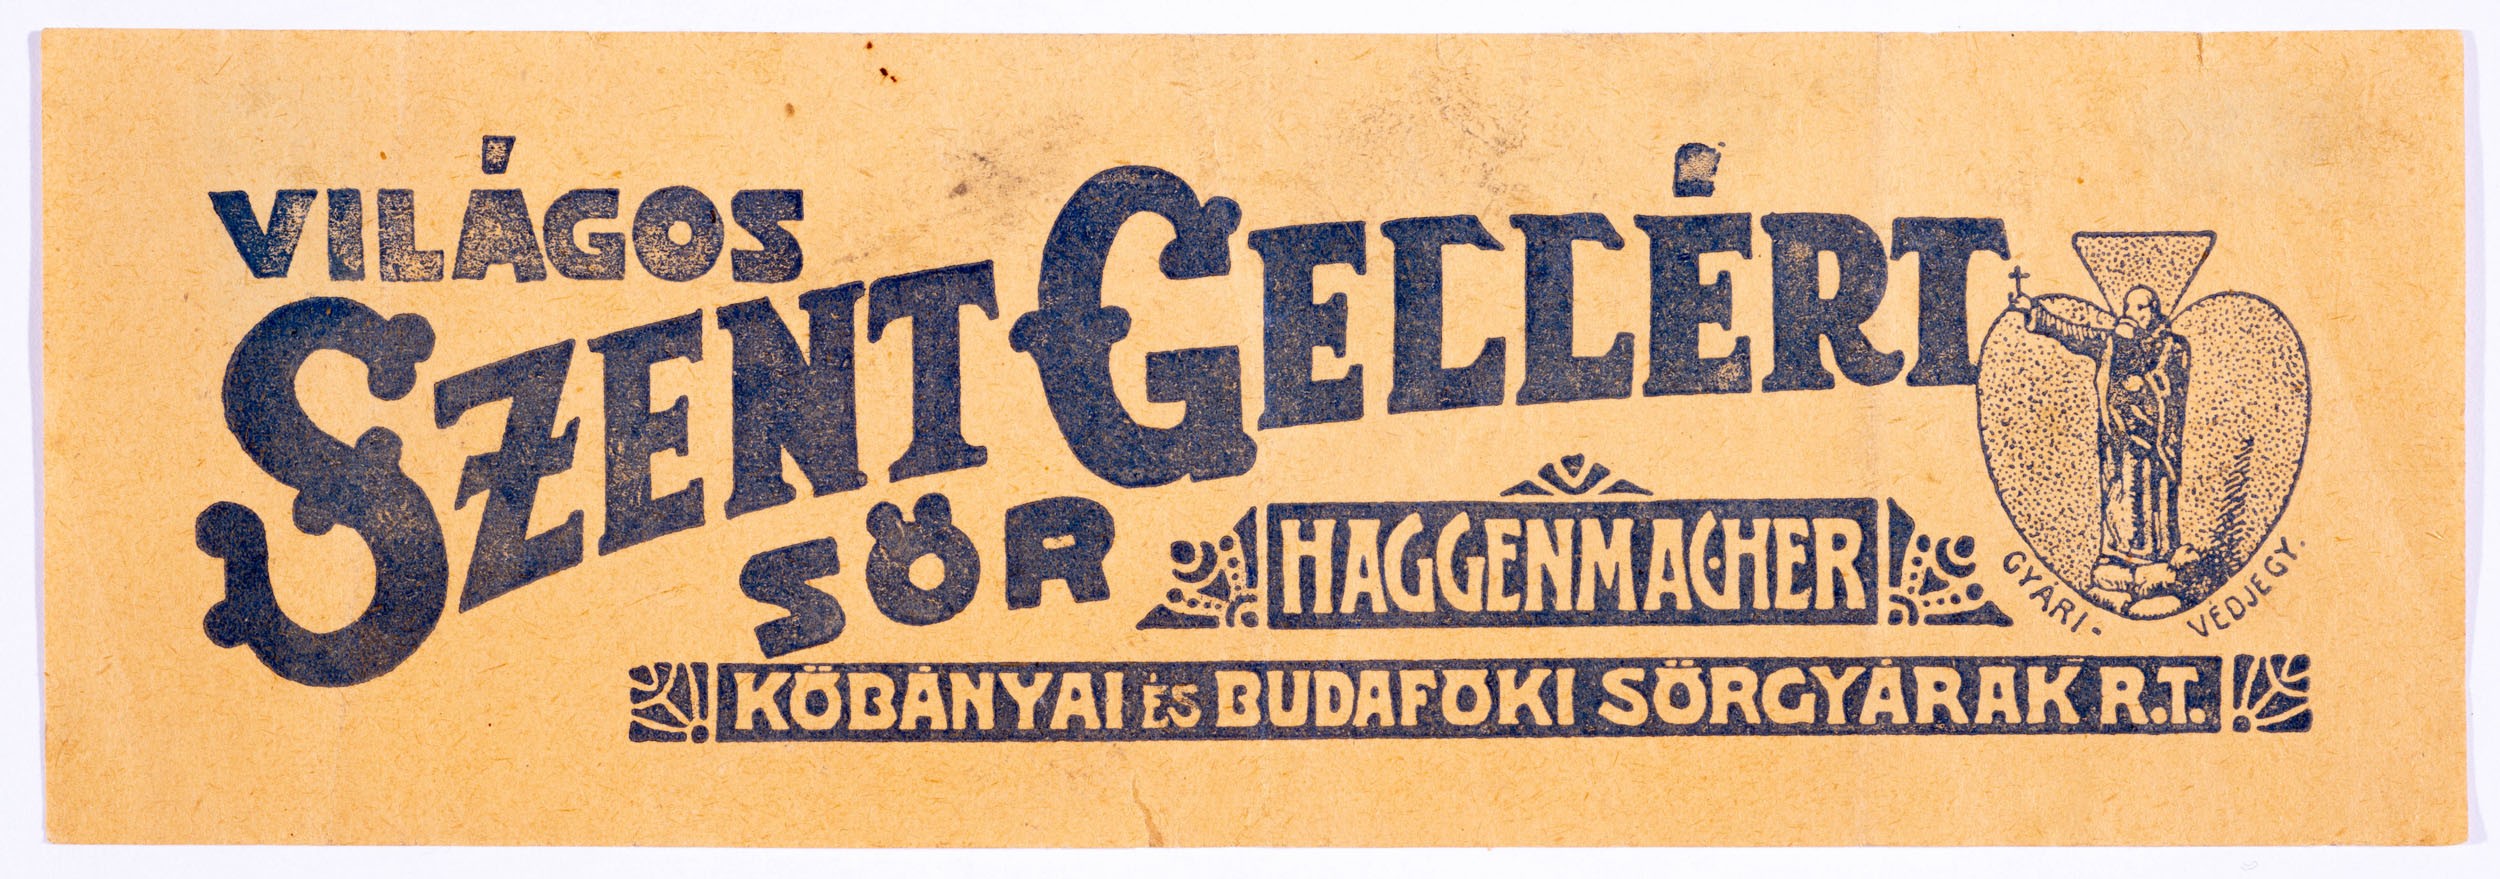 Haggenmacher szent gellért sör (Söripari Emléktár - Dreher Sörmúzeum CC BY-NC-SA)